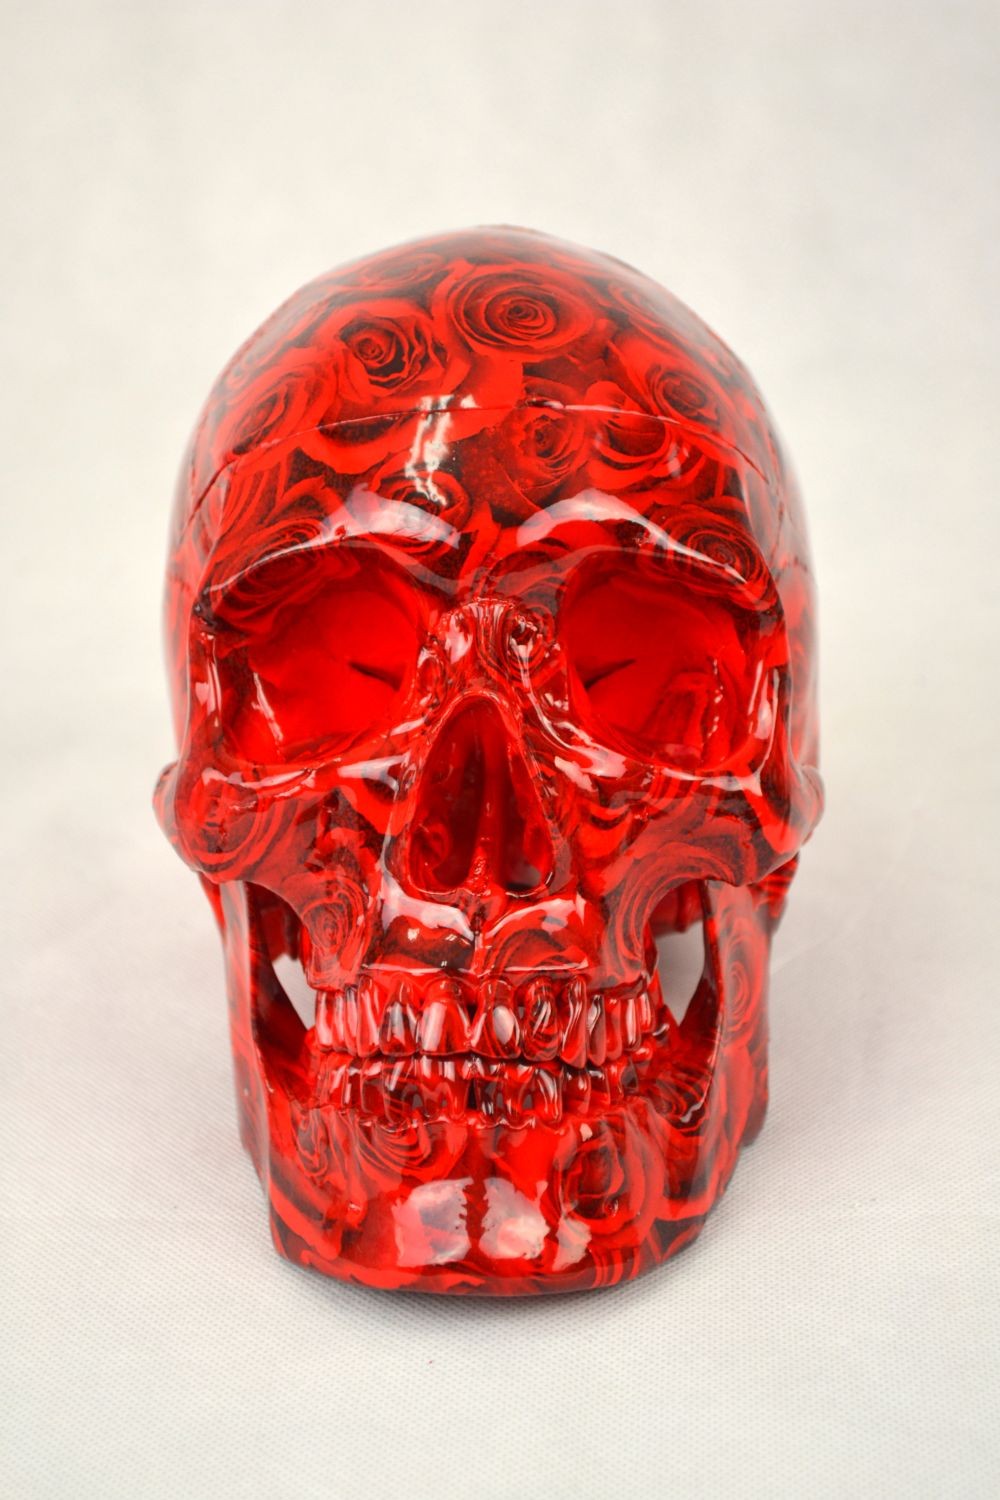 High Degree Emulation 1:1 Human Medical Skull Art Replica, 2-part, Life Size Rose Black